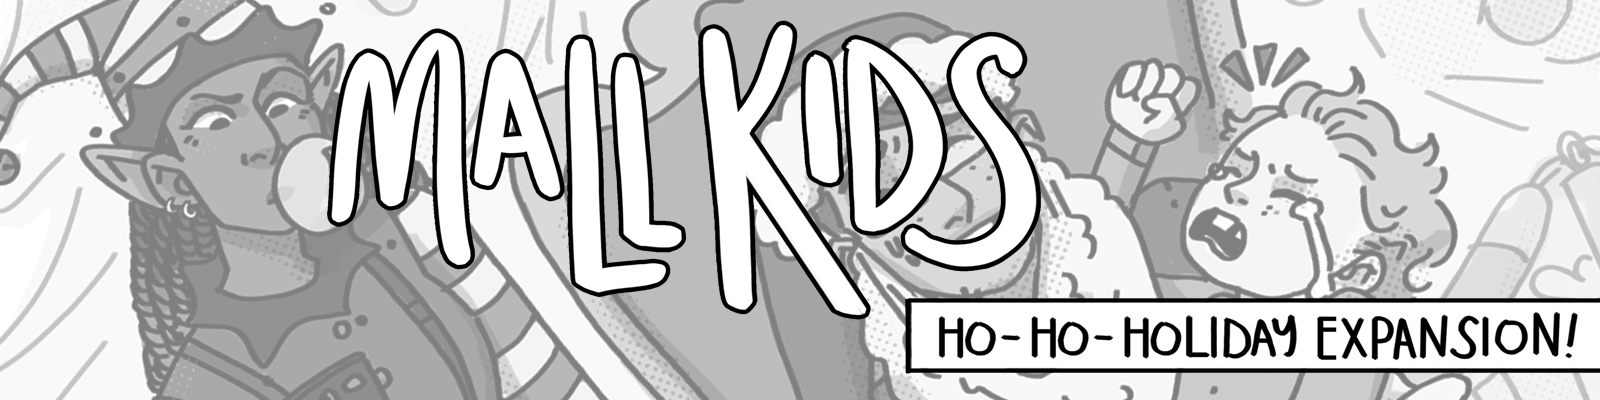 Mall Kids: Ho-Ho-Holiday Expansion